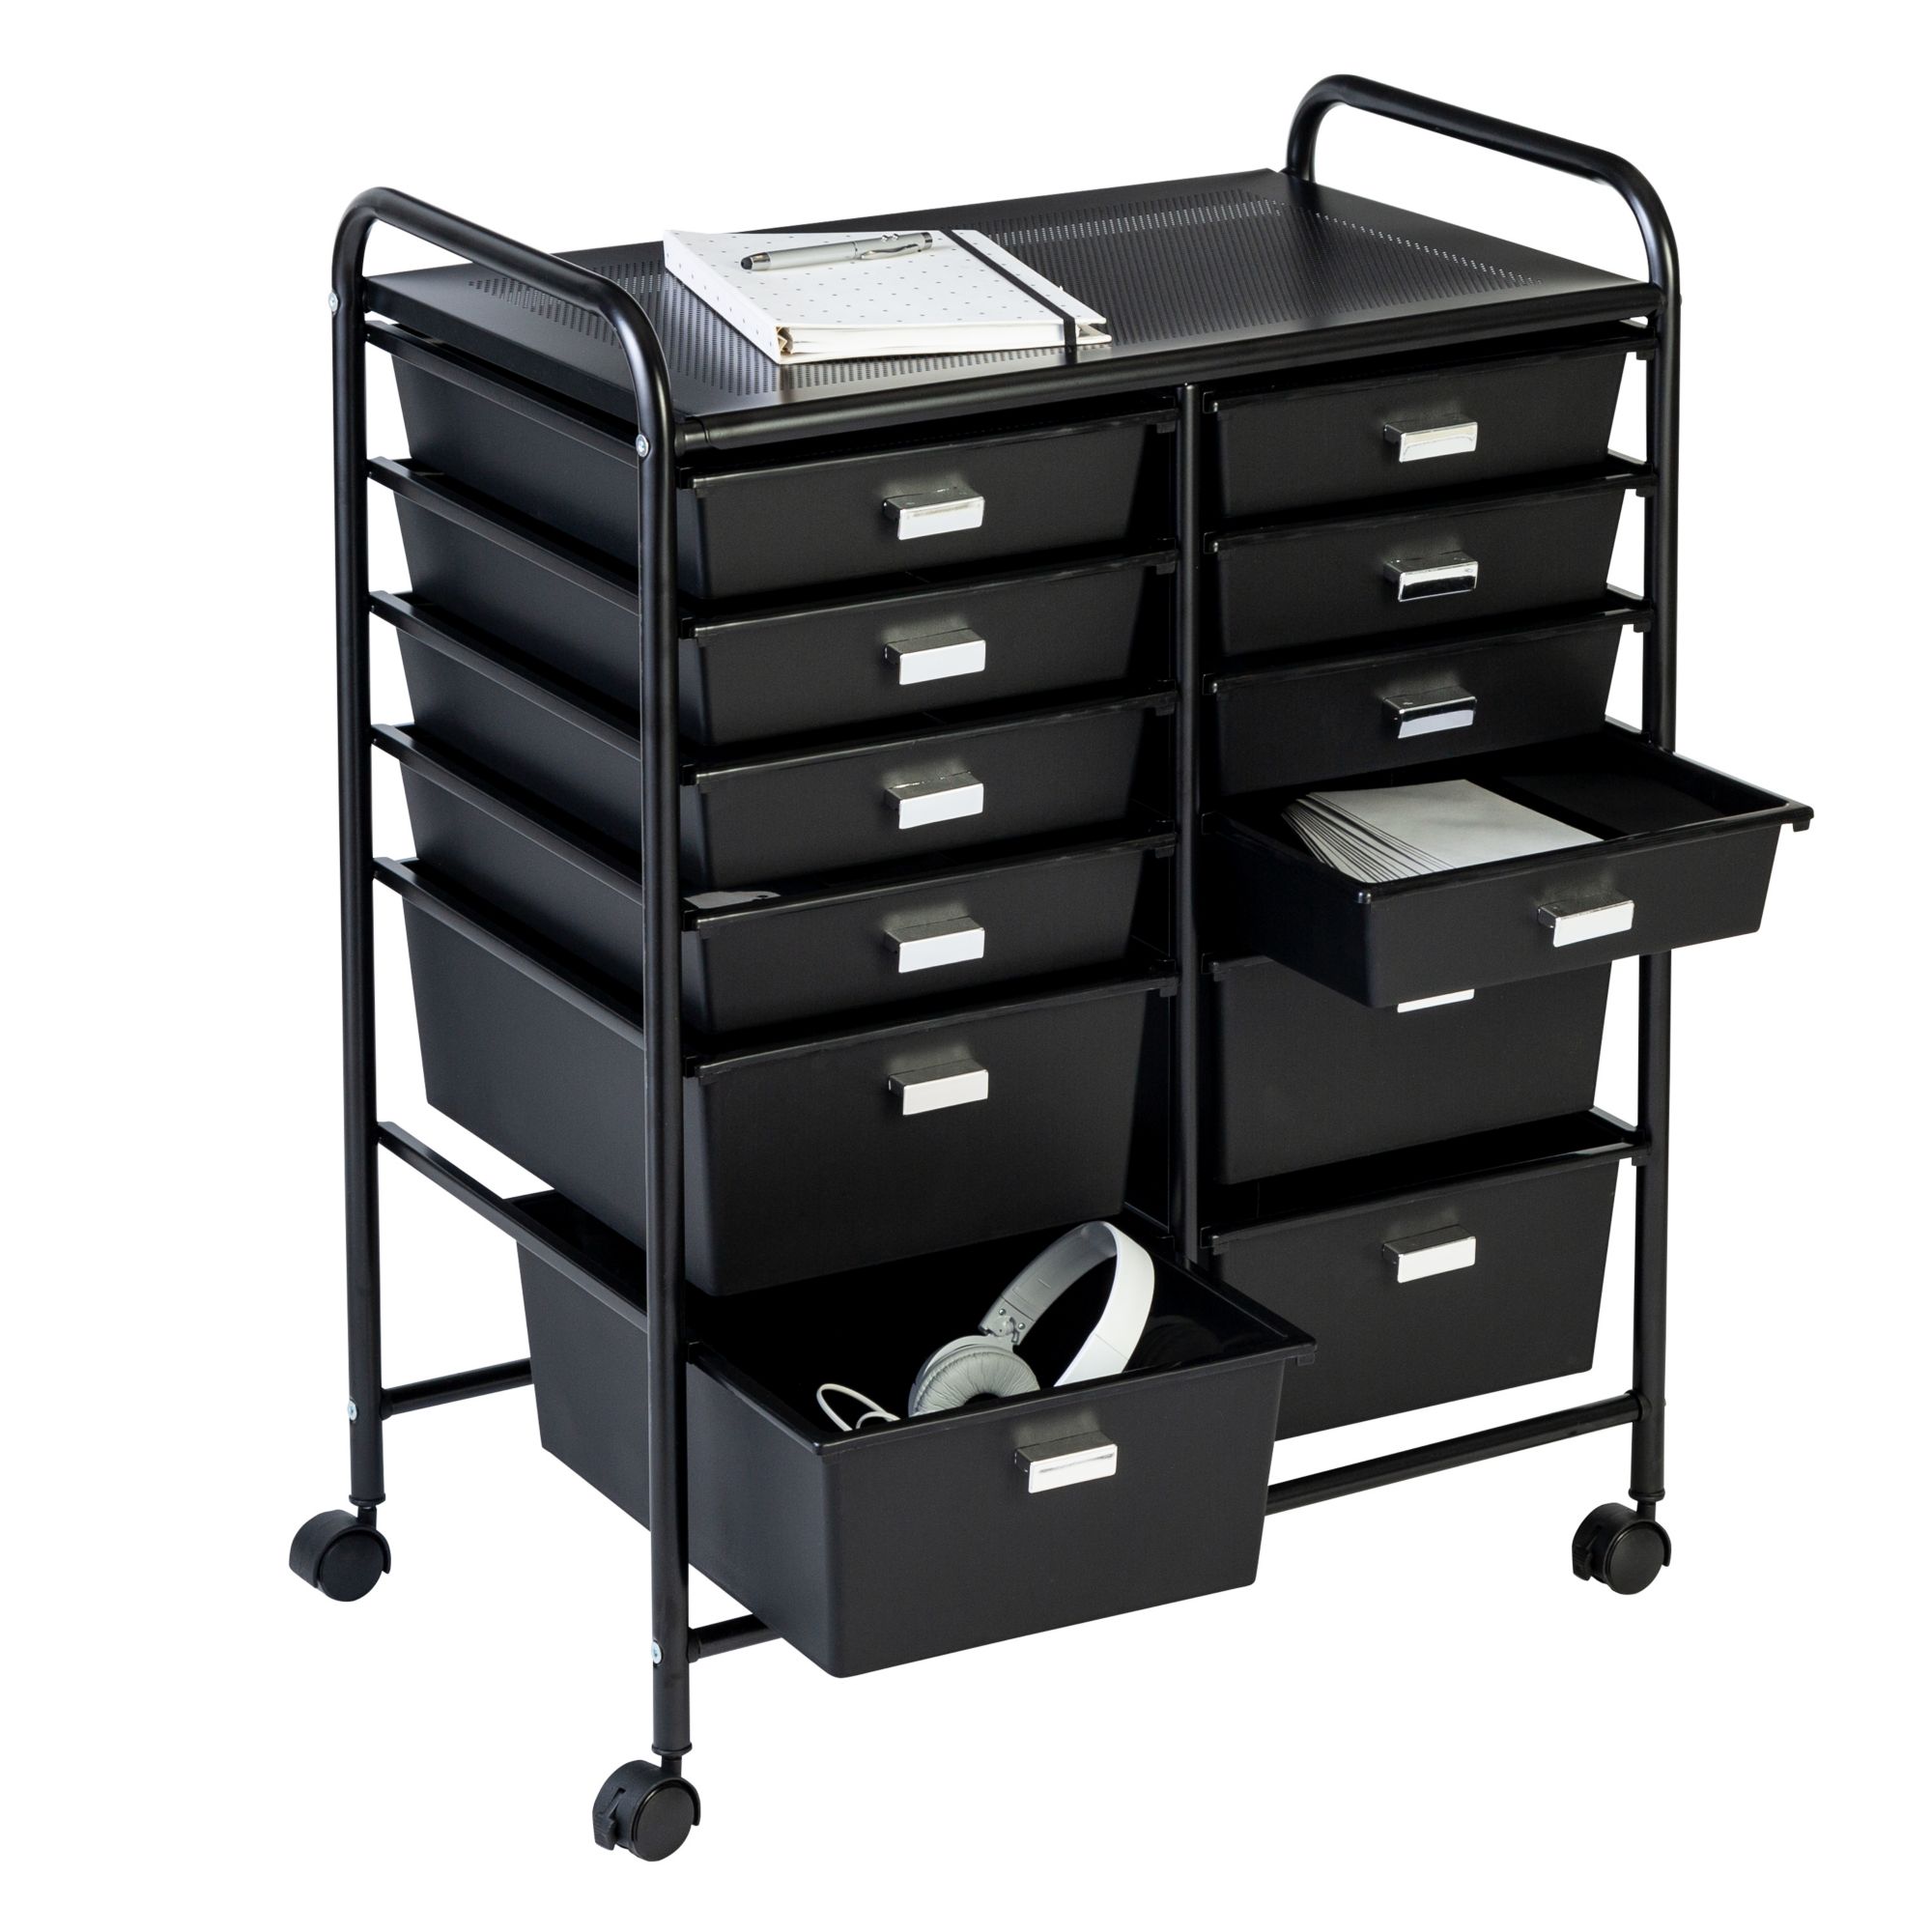 15-Drawer Steel 4-Wheeled Utility Rolling Cart Storage Organizer in Black